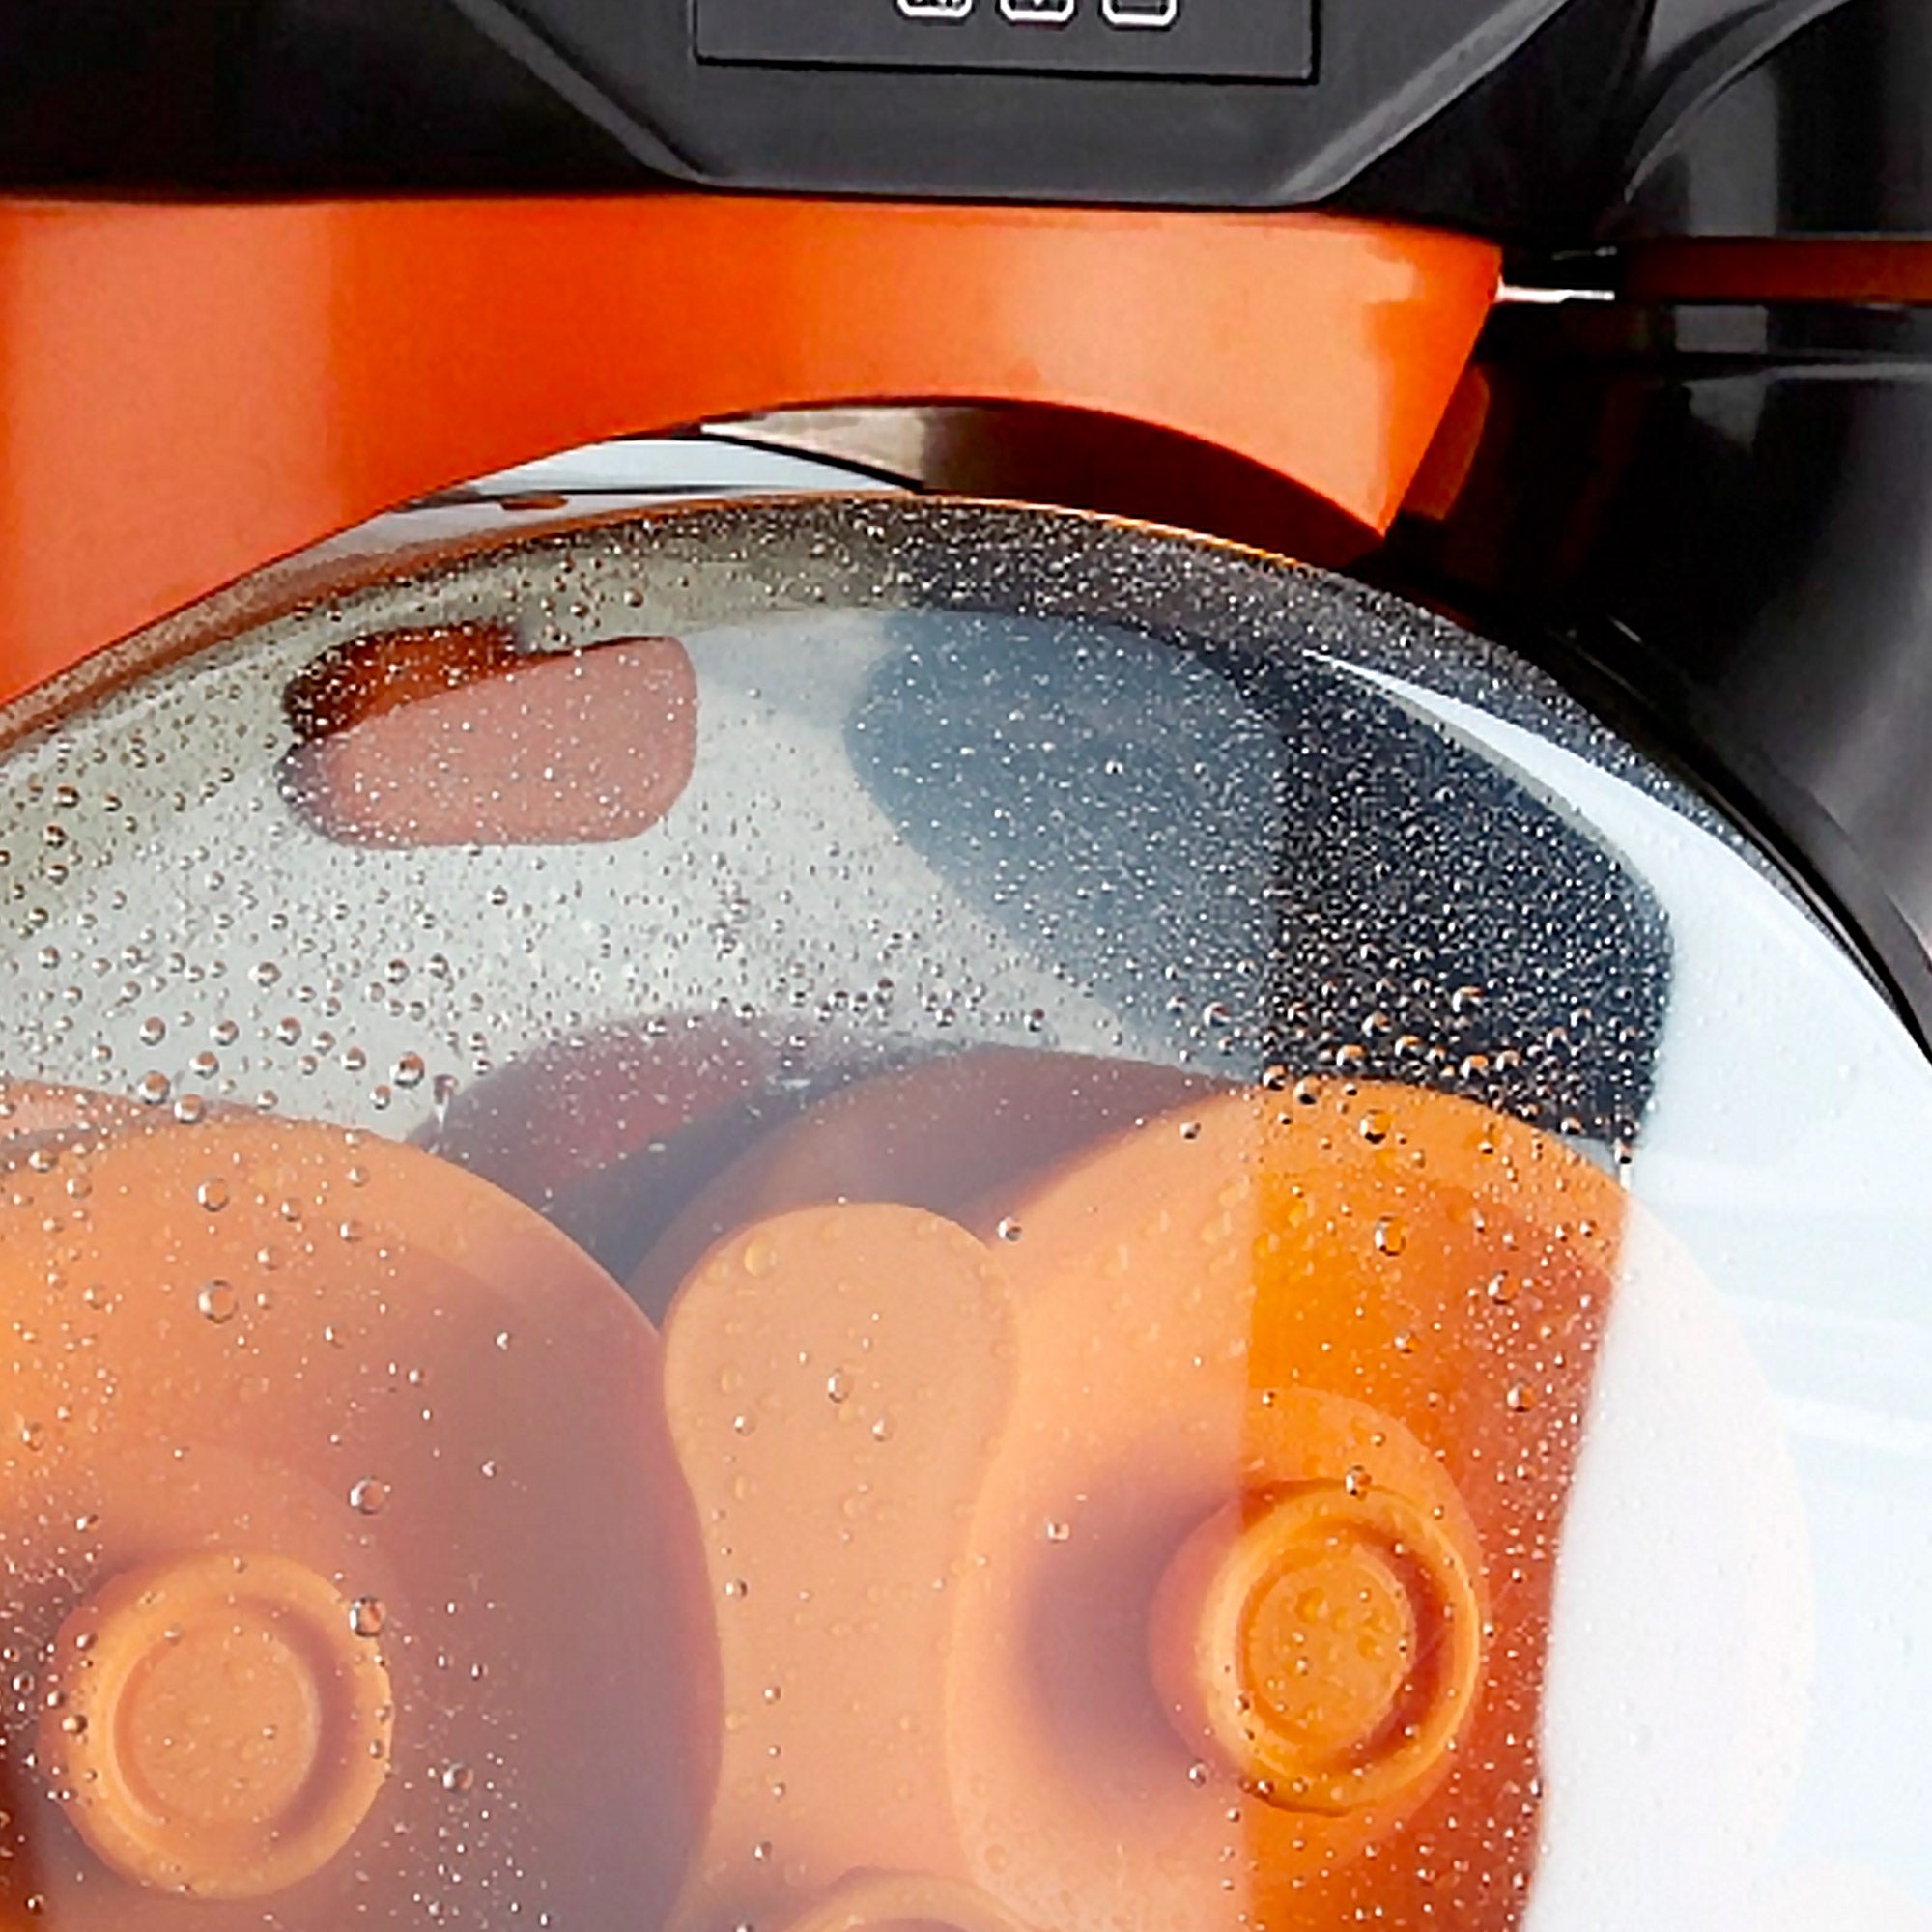 Elektrisk appelsinpresse - oransje - Automatisk parring - inkludert avløpskran og rengjøringsmodus